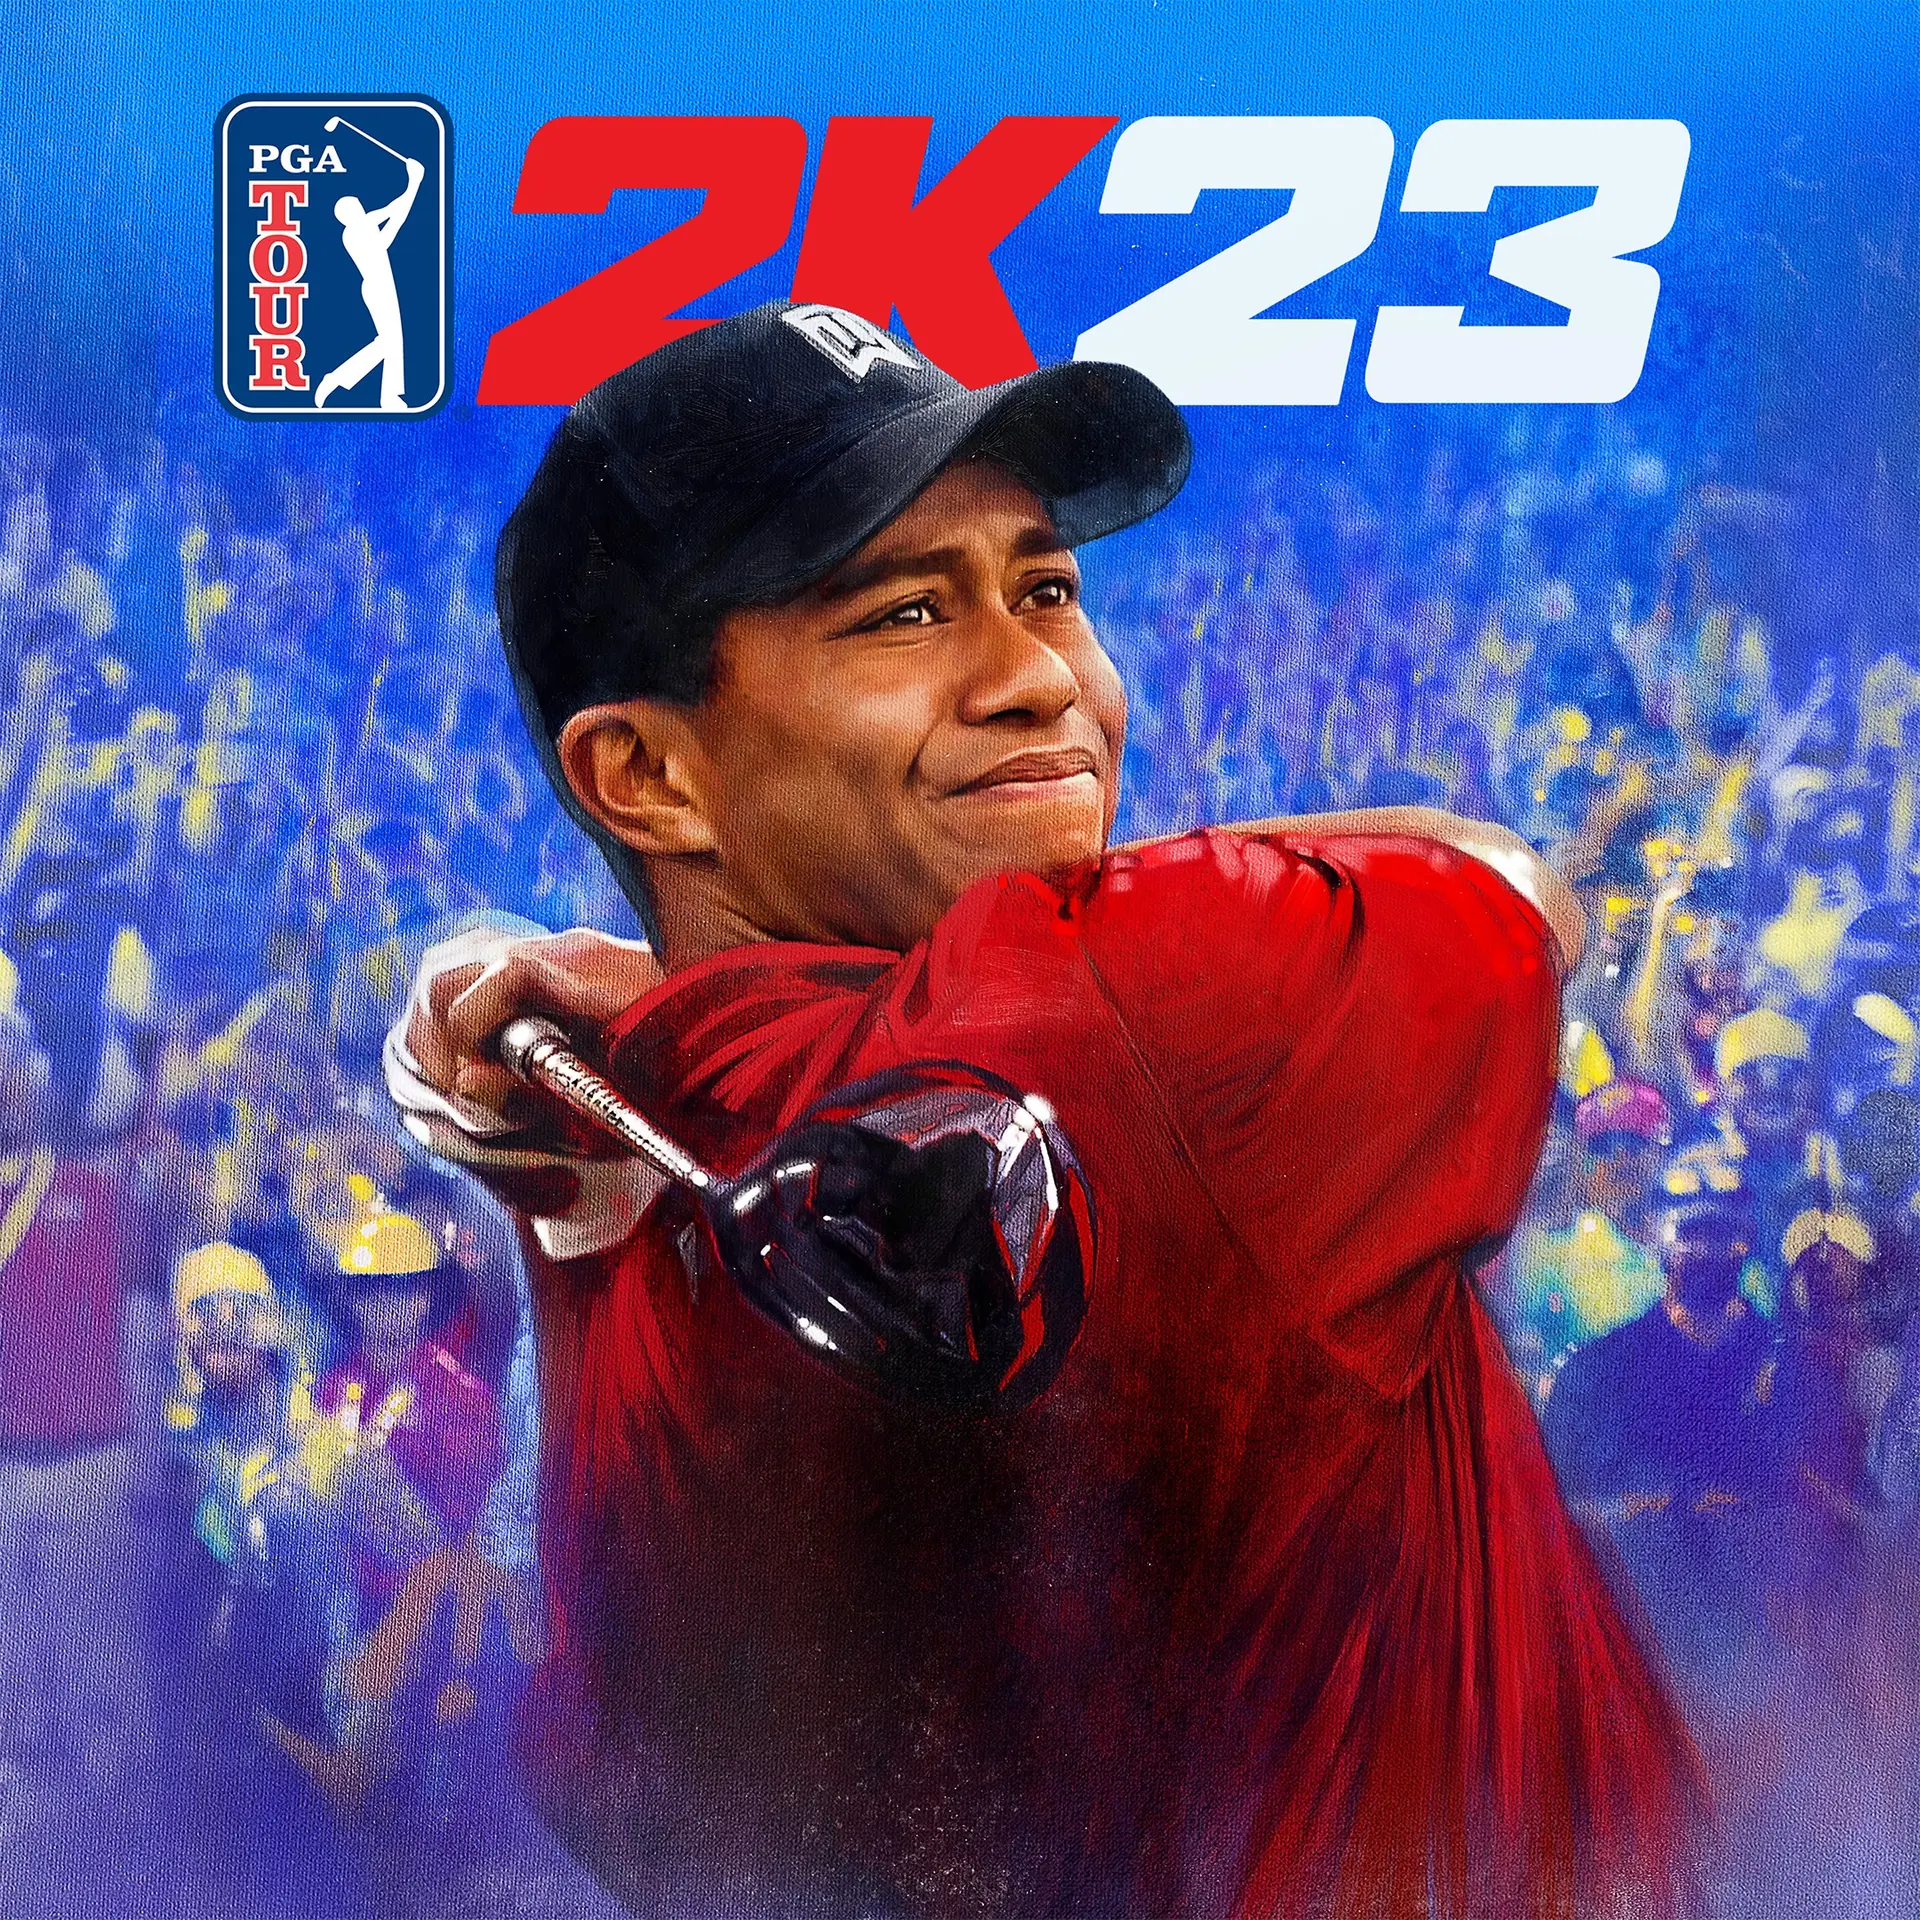 PGA TOUR 2K23 Pre-Order for Xbox One (XBOX One - Cheapest Store)